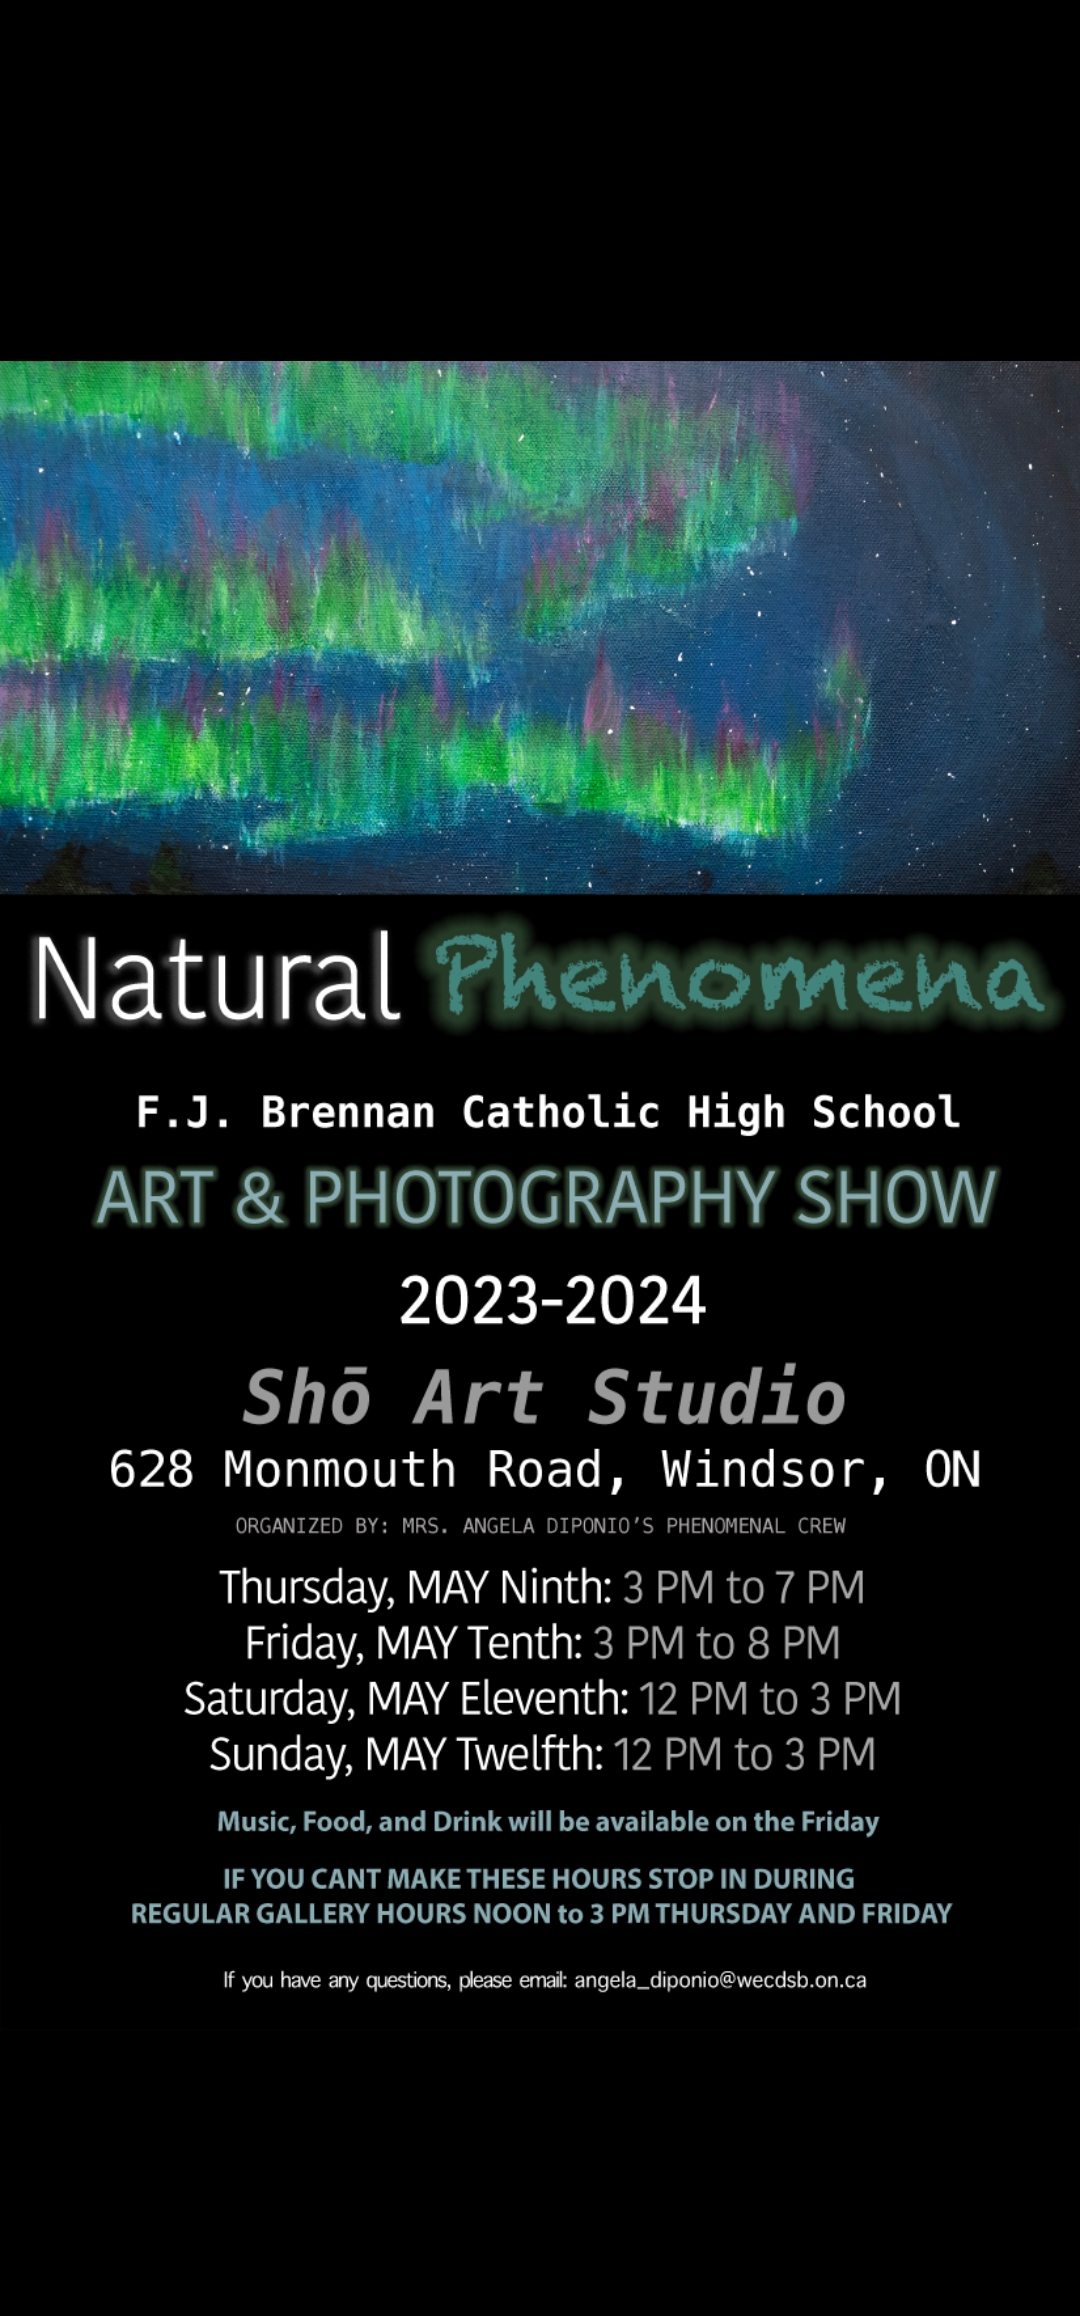 Natural Phenomena: F.J. Brennan Catholic High School Art and Photography Show